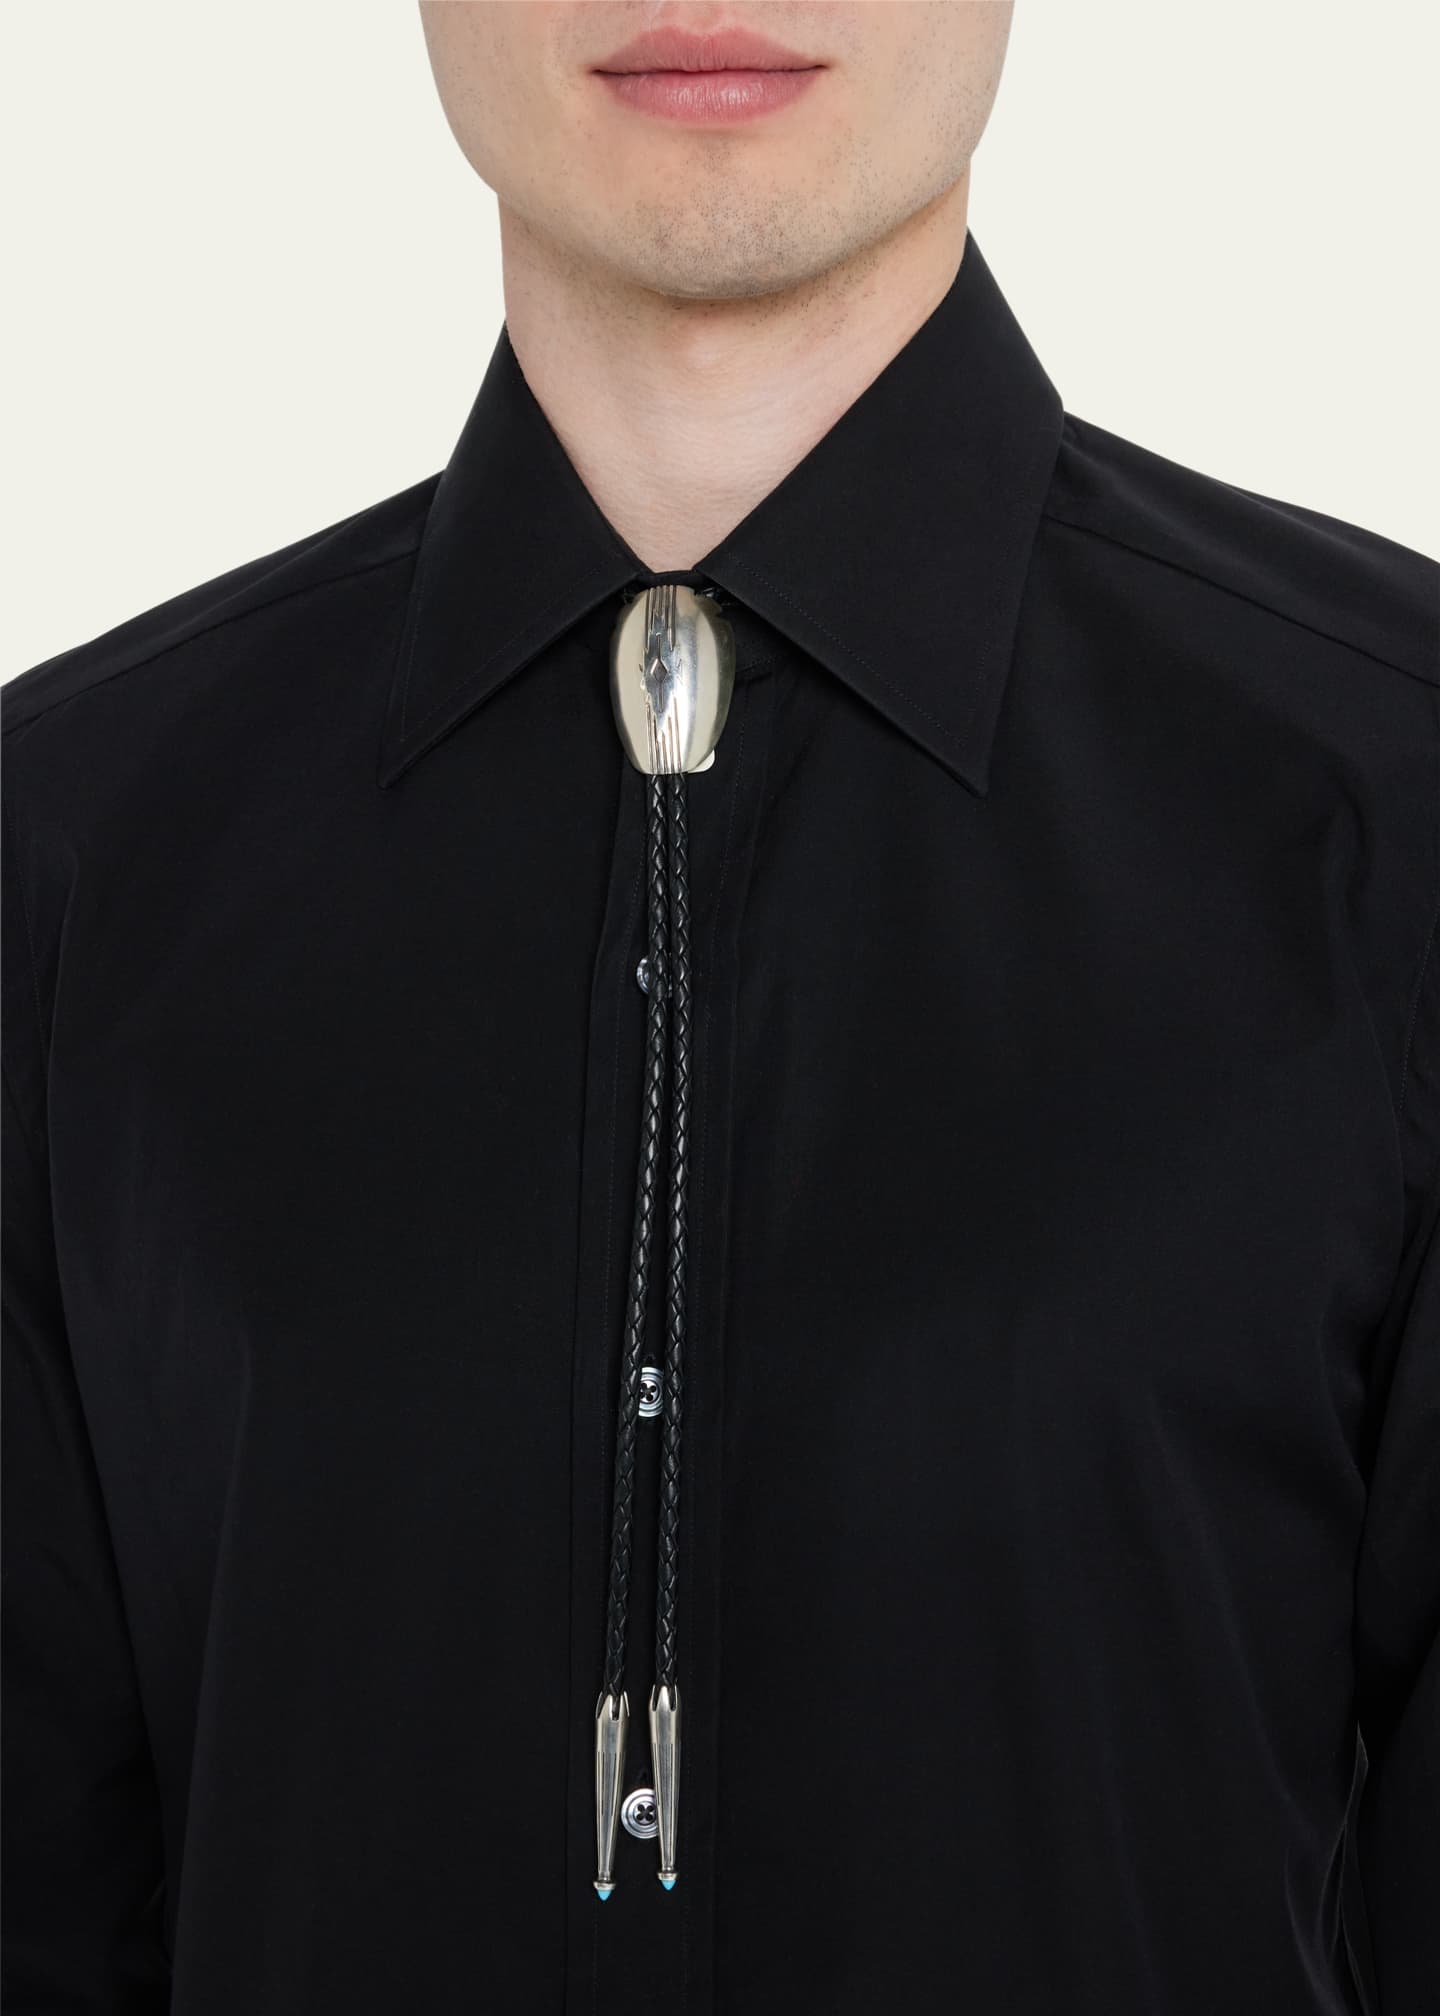 Prada Saffiano Leather Bolo Tie - Black Ties, Suiting Accessories